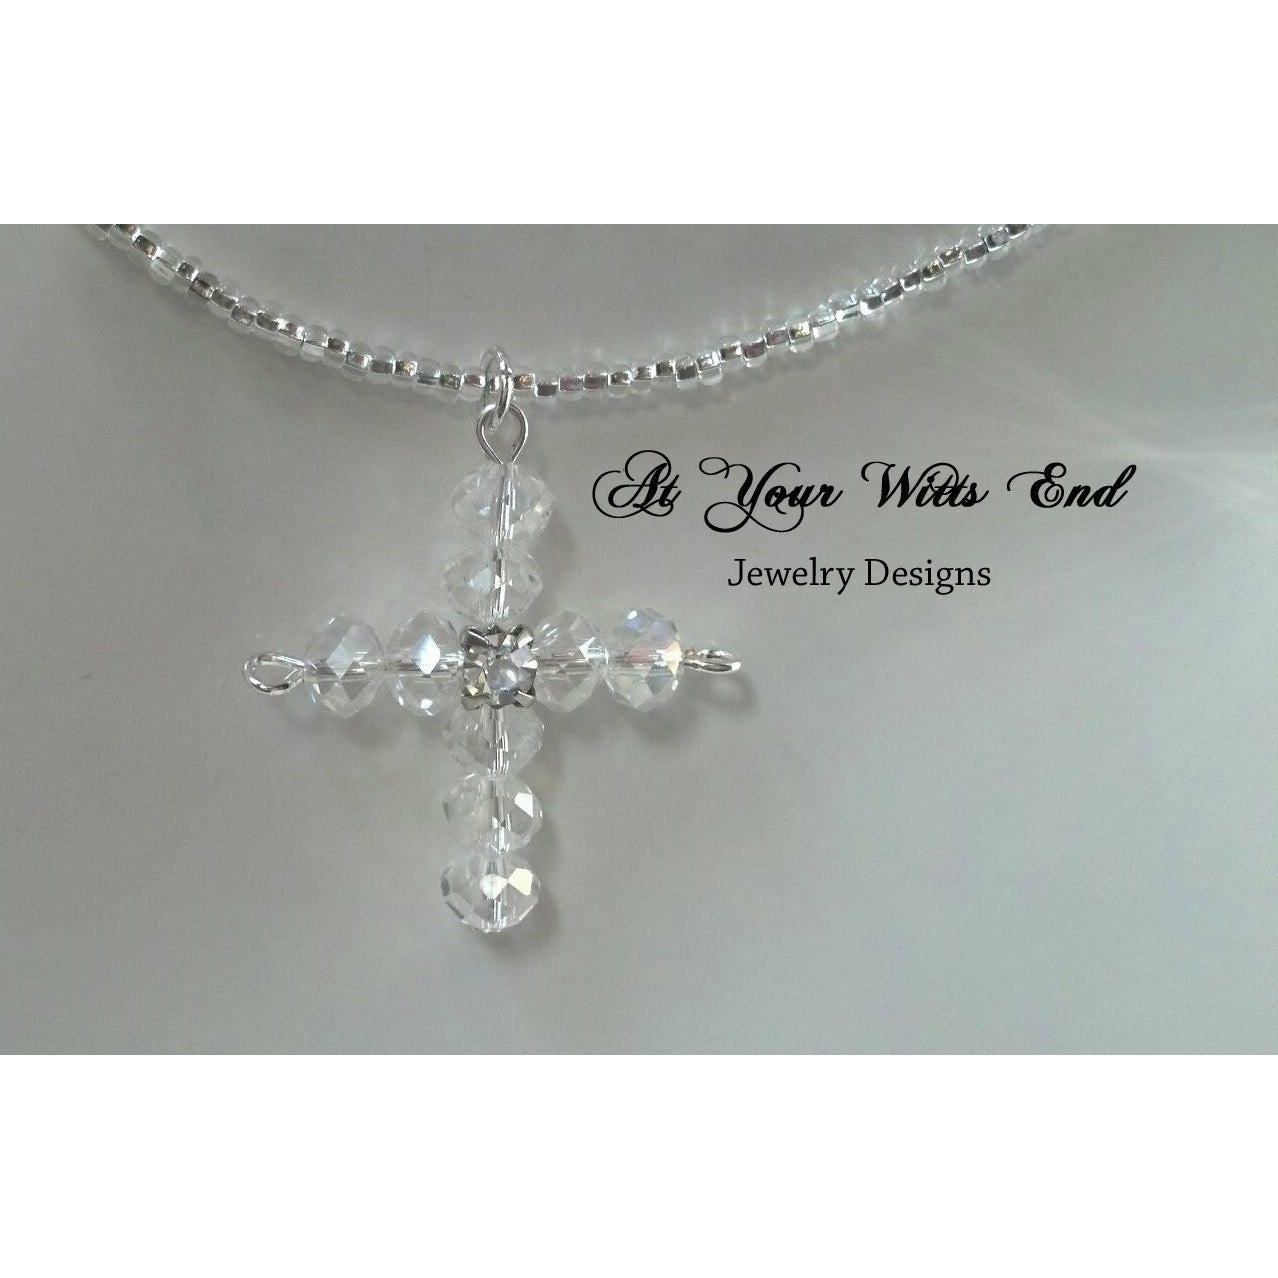 Little Girls Cross Necklace. Religious jewelry